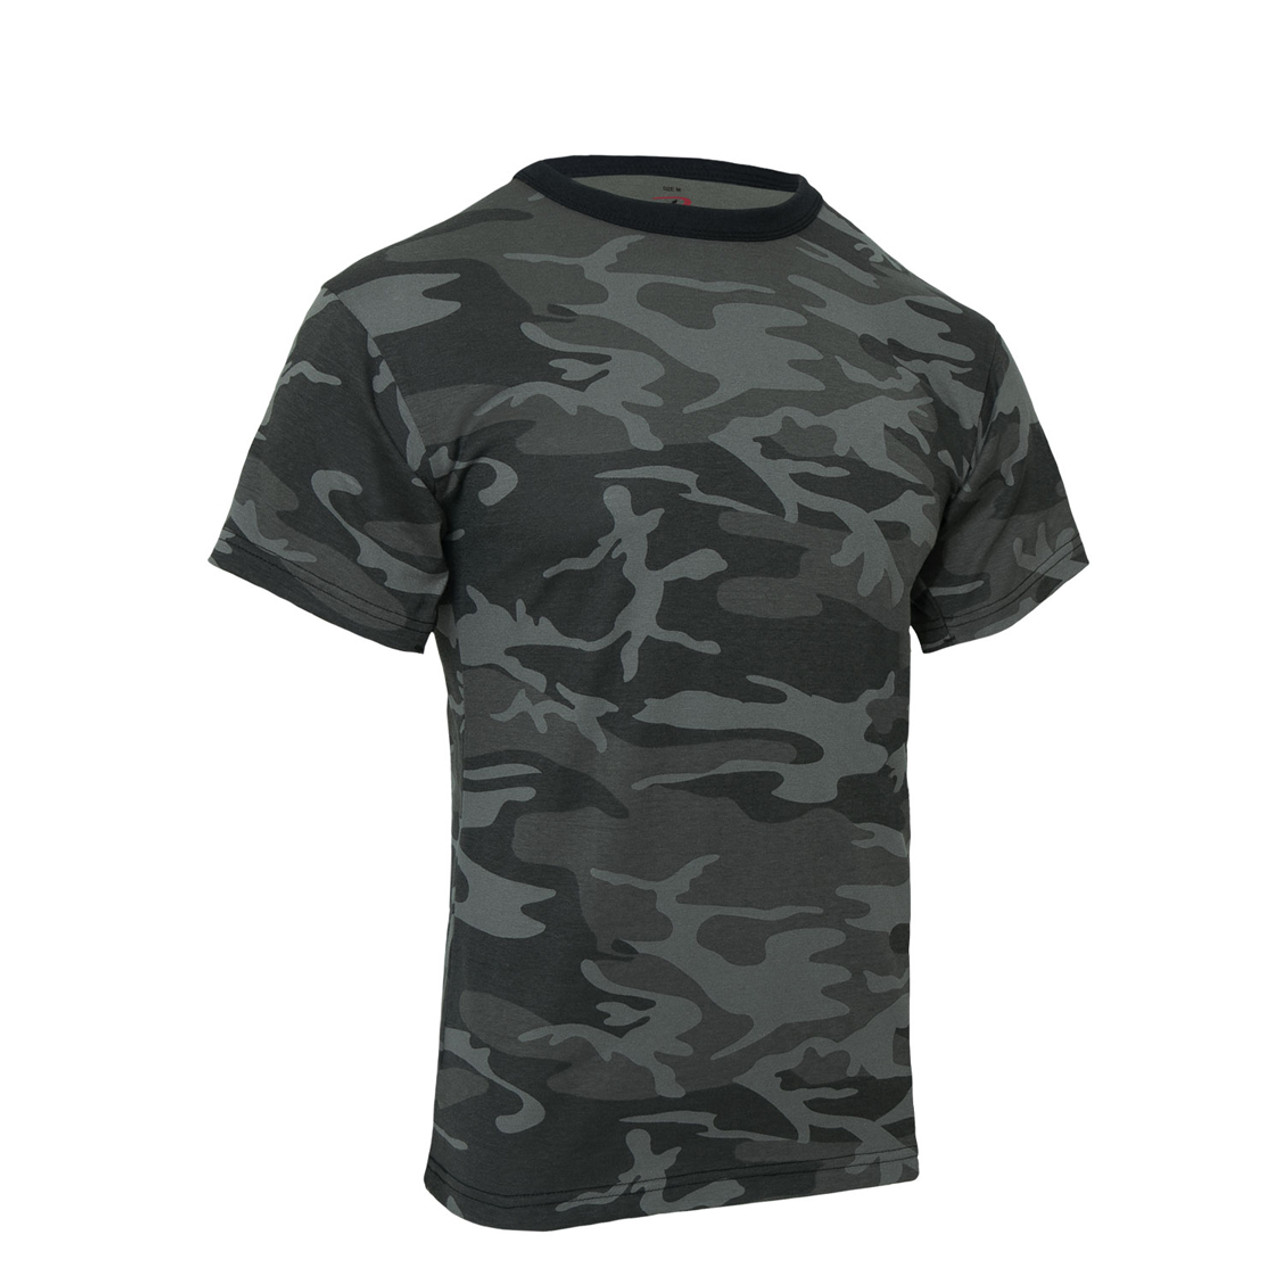 Shop Black Fatigues Army - T Navy Gear Camo Shirts